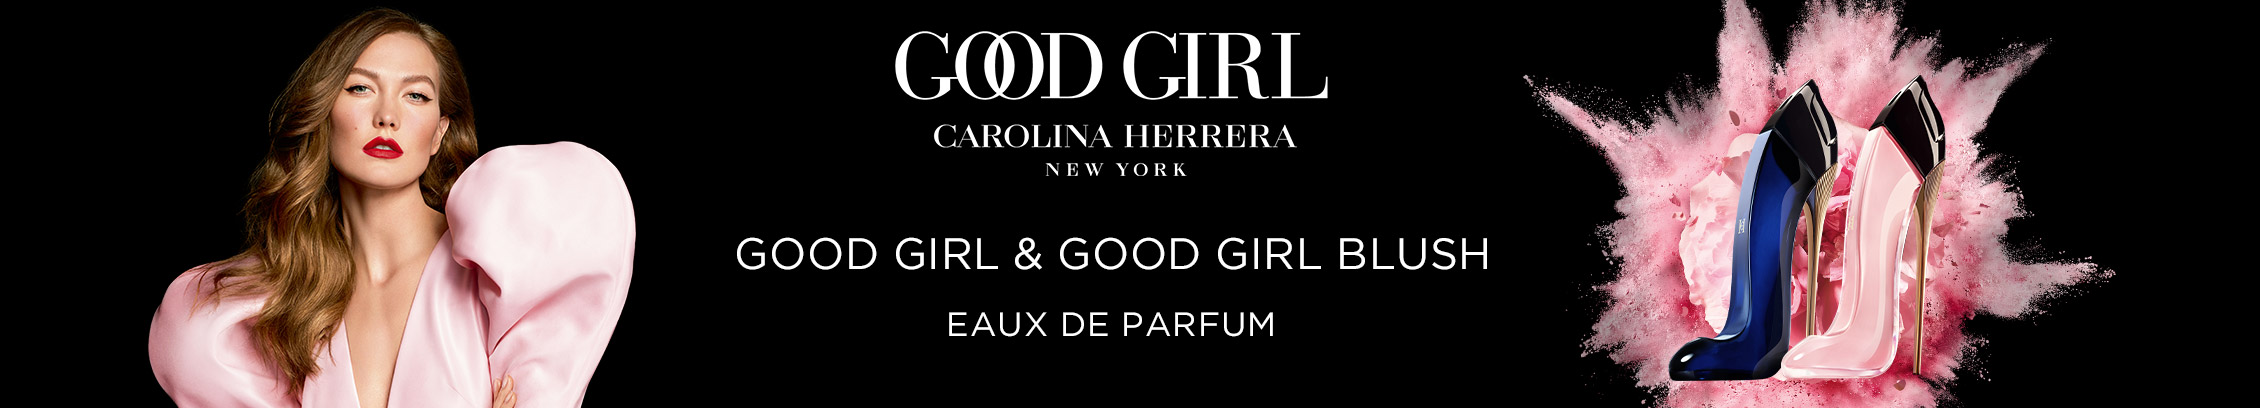 Good Girl de Carolina Herrera